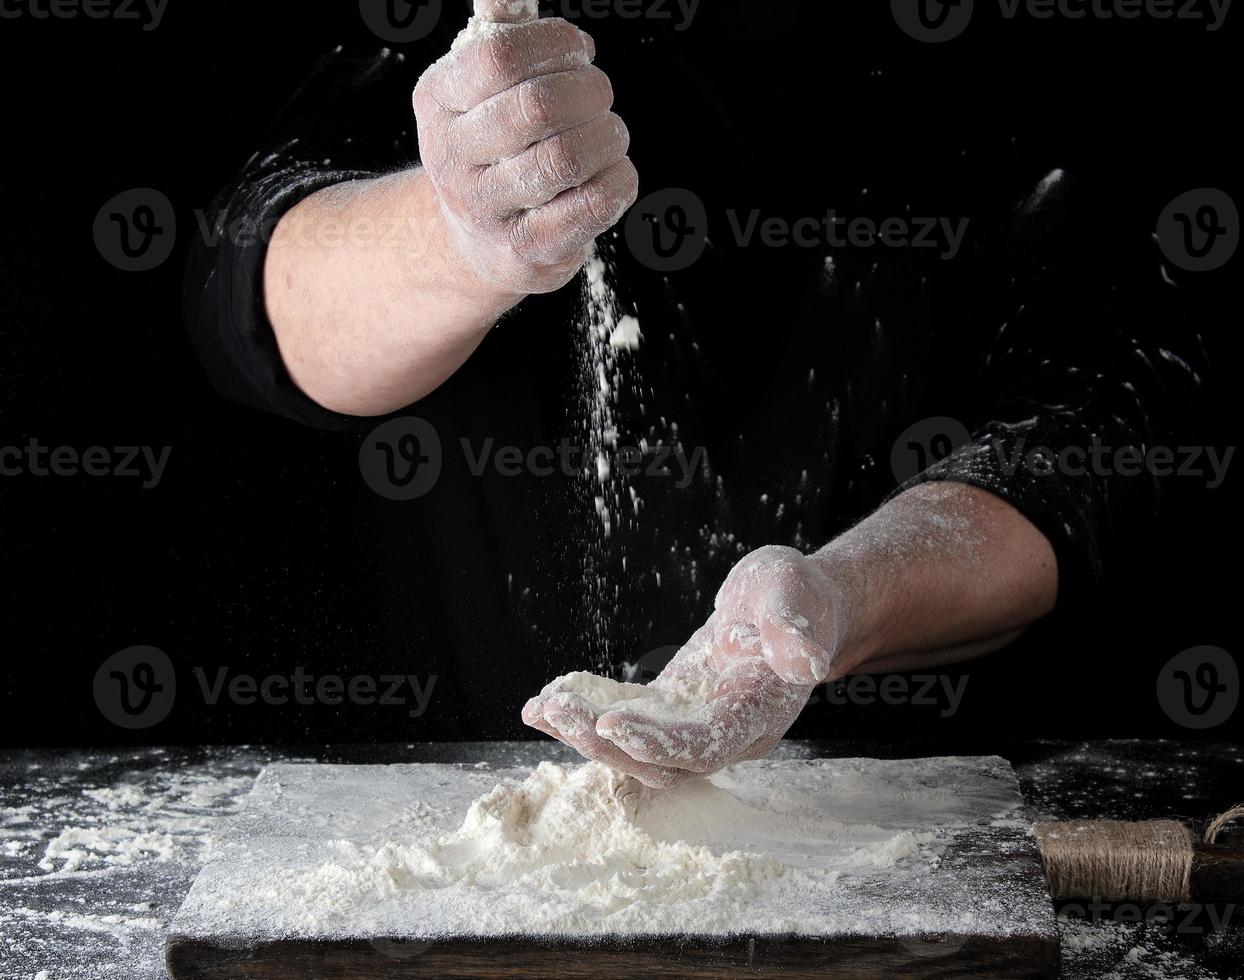 chef in black uniform sifts through his fingers white wheat flour photo